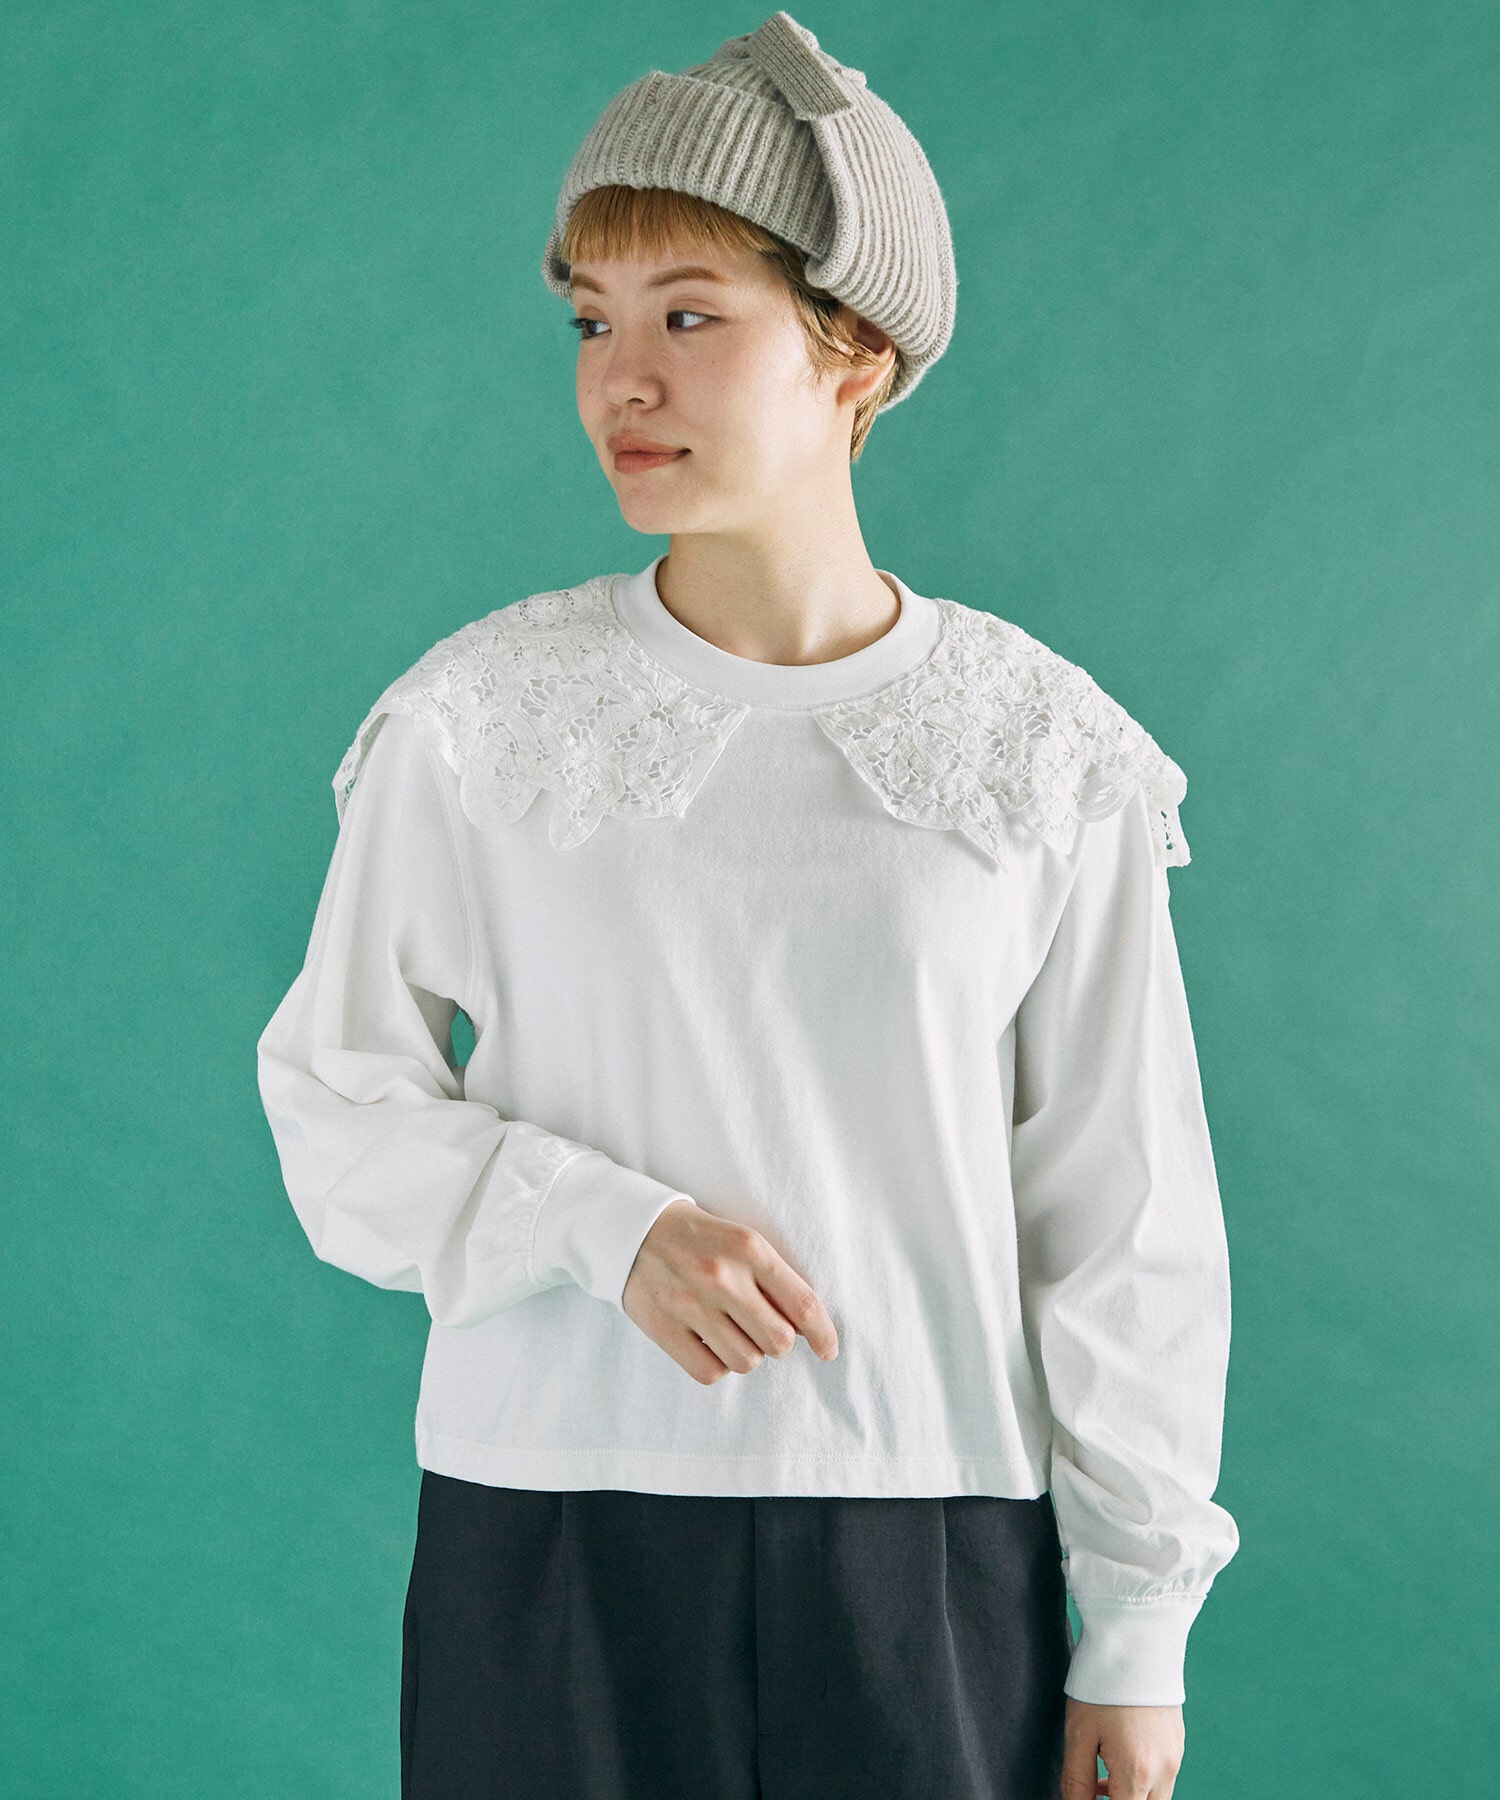 AMBIDEX Store △○バテンレース ショルダー Tシャツ(F WHITE): FLAT 